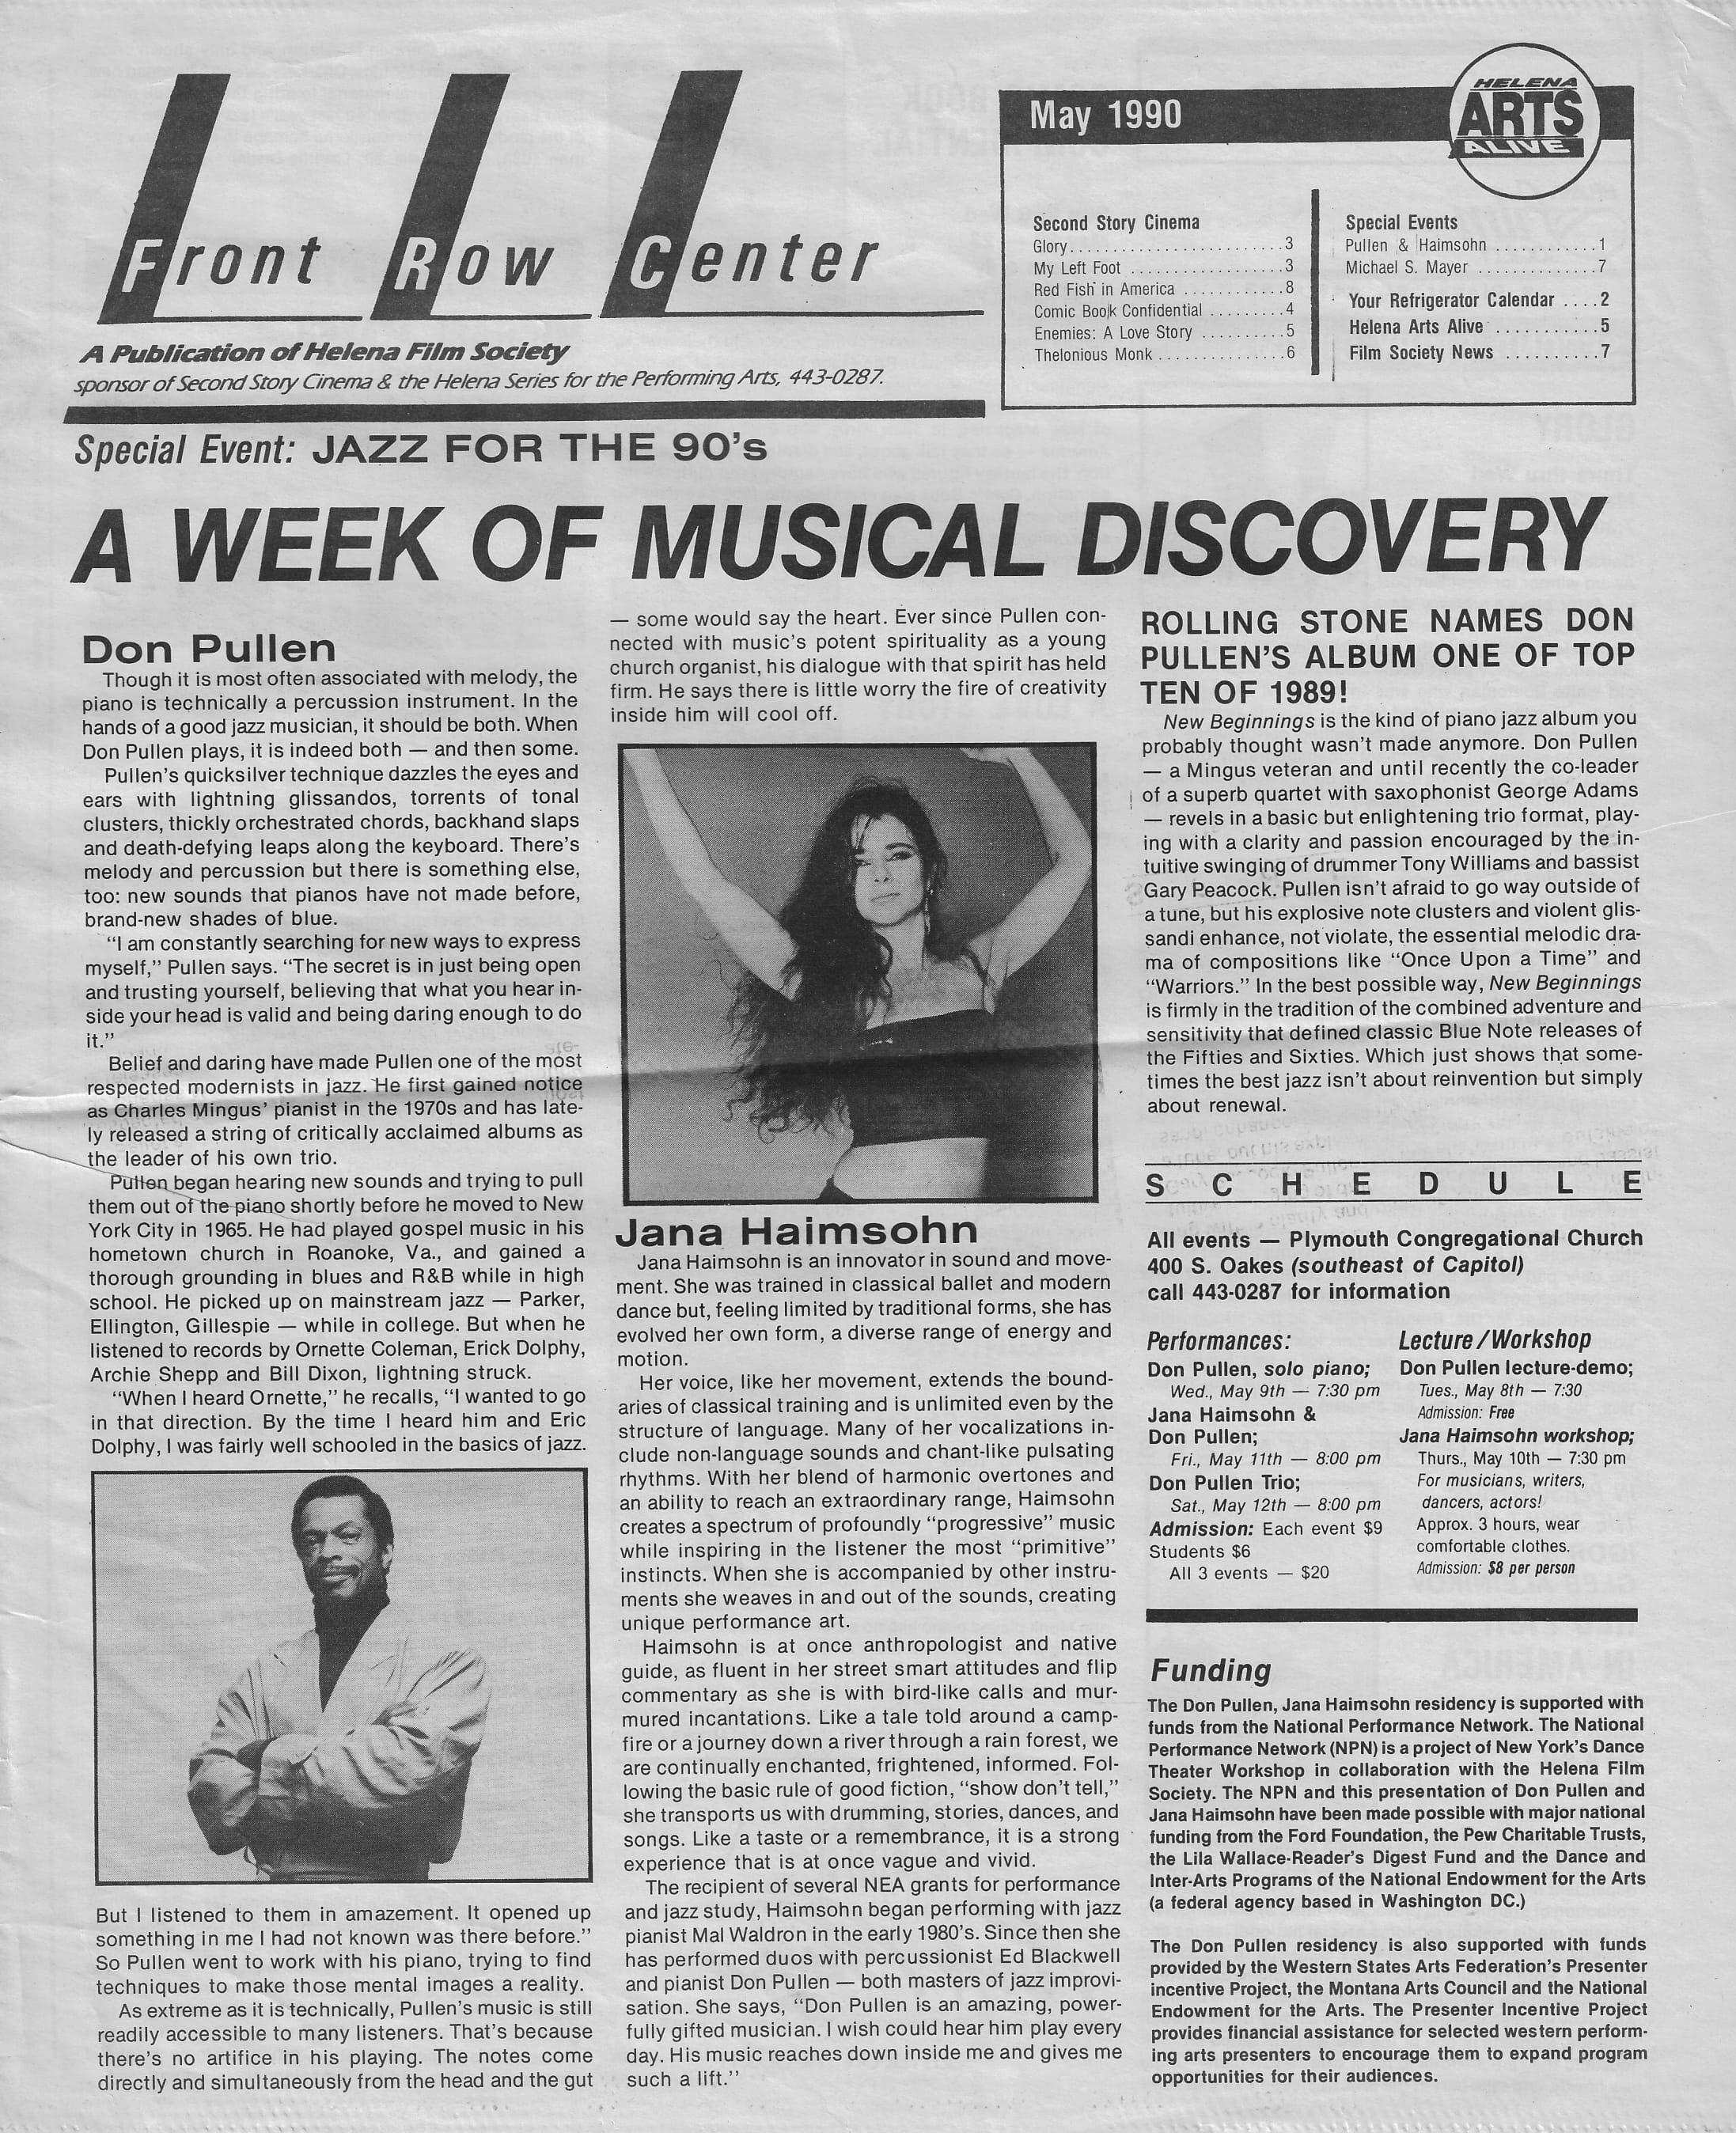 Helena, MT (newspaper promo) _'90.jpg